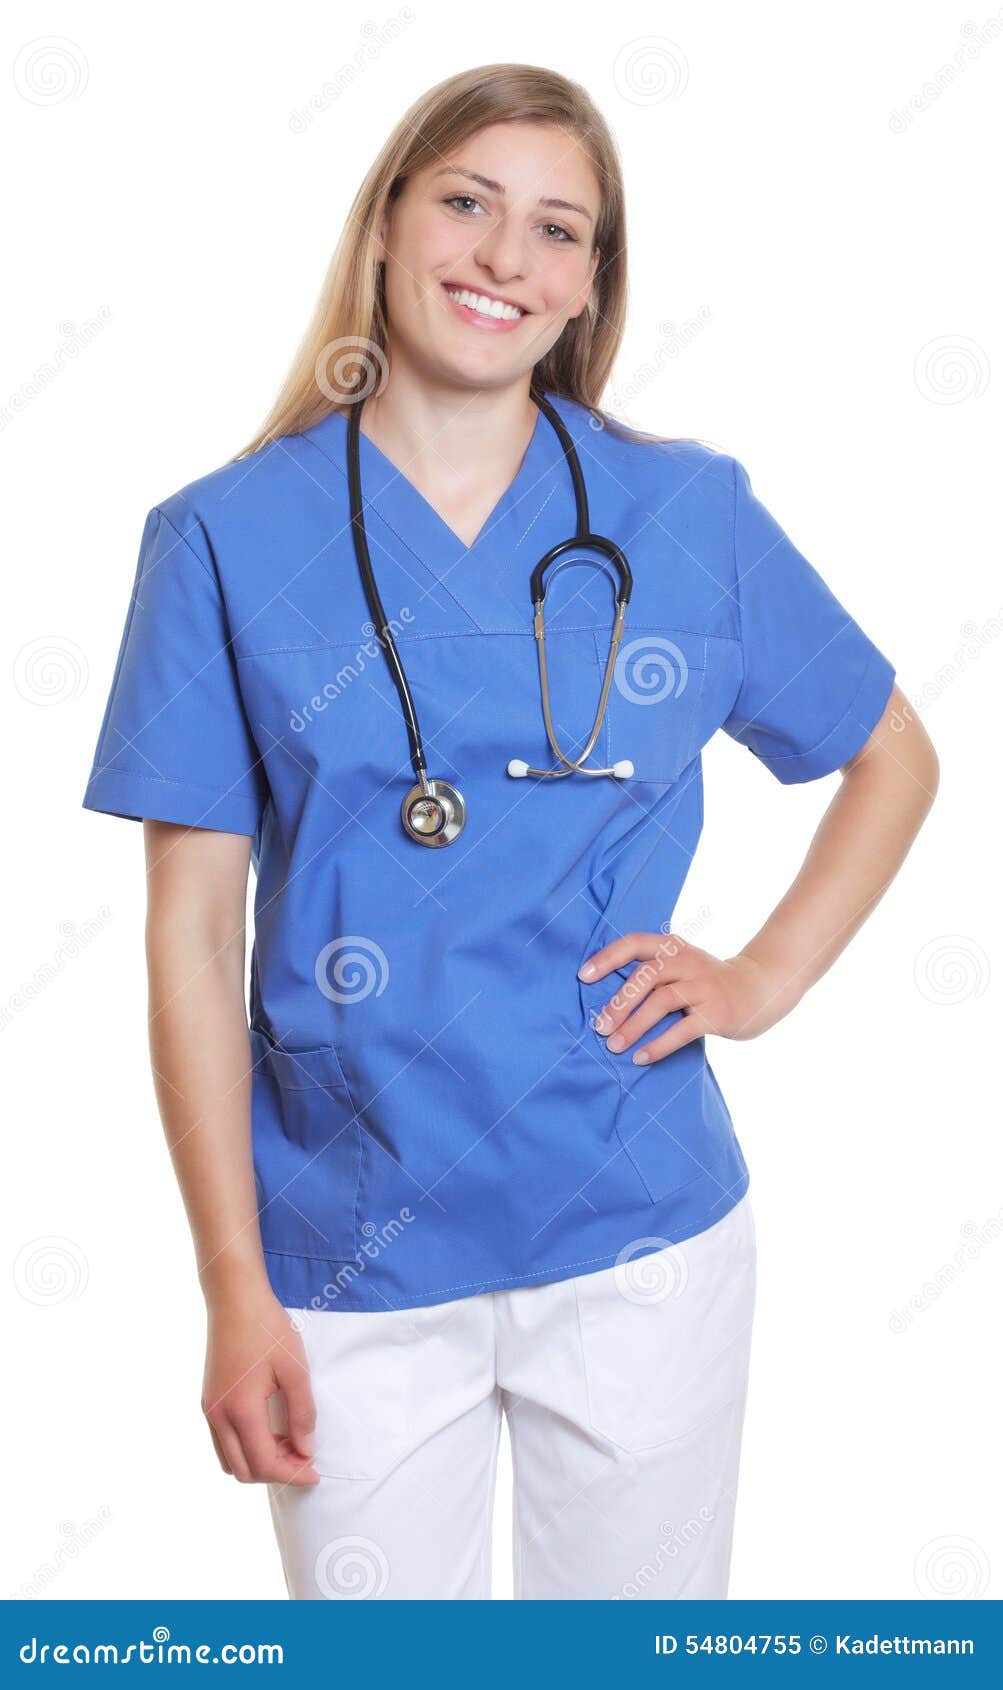 German Nurse